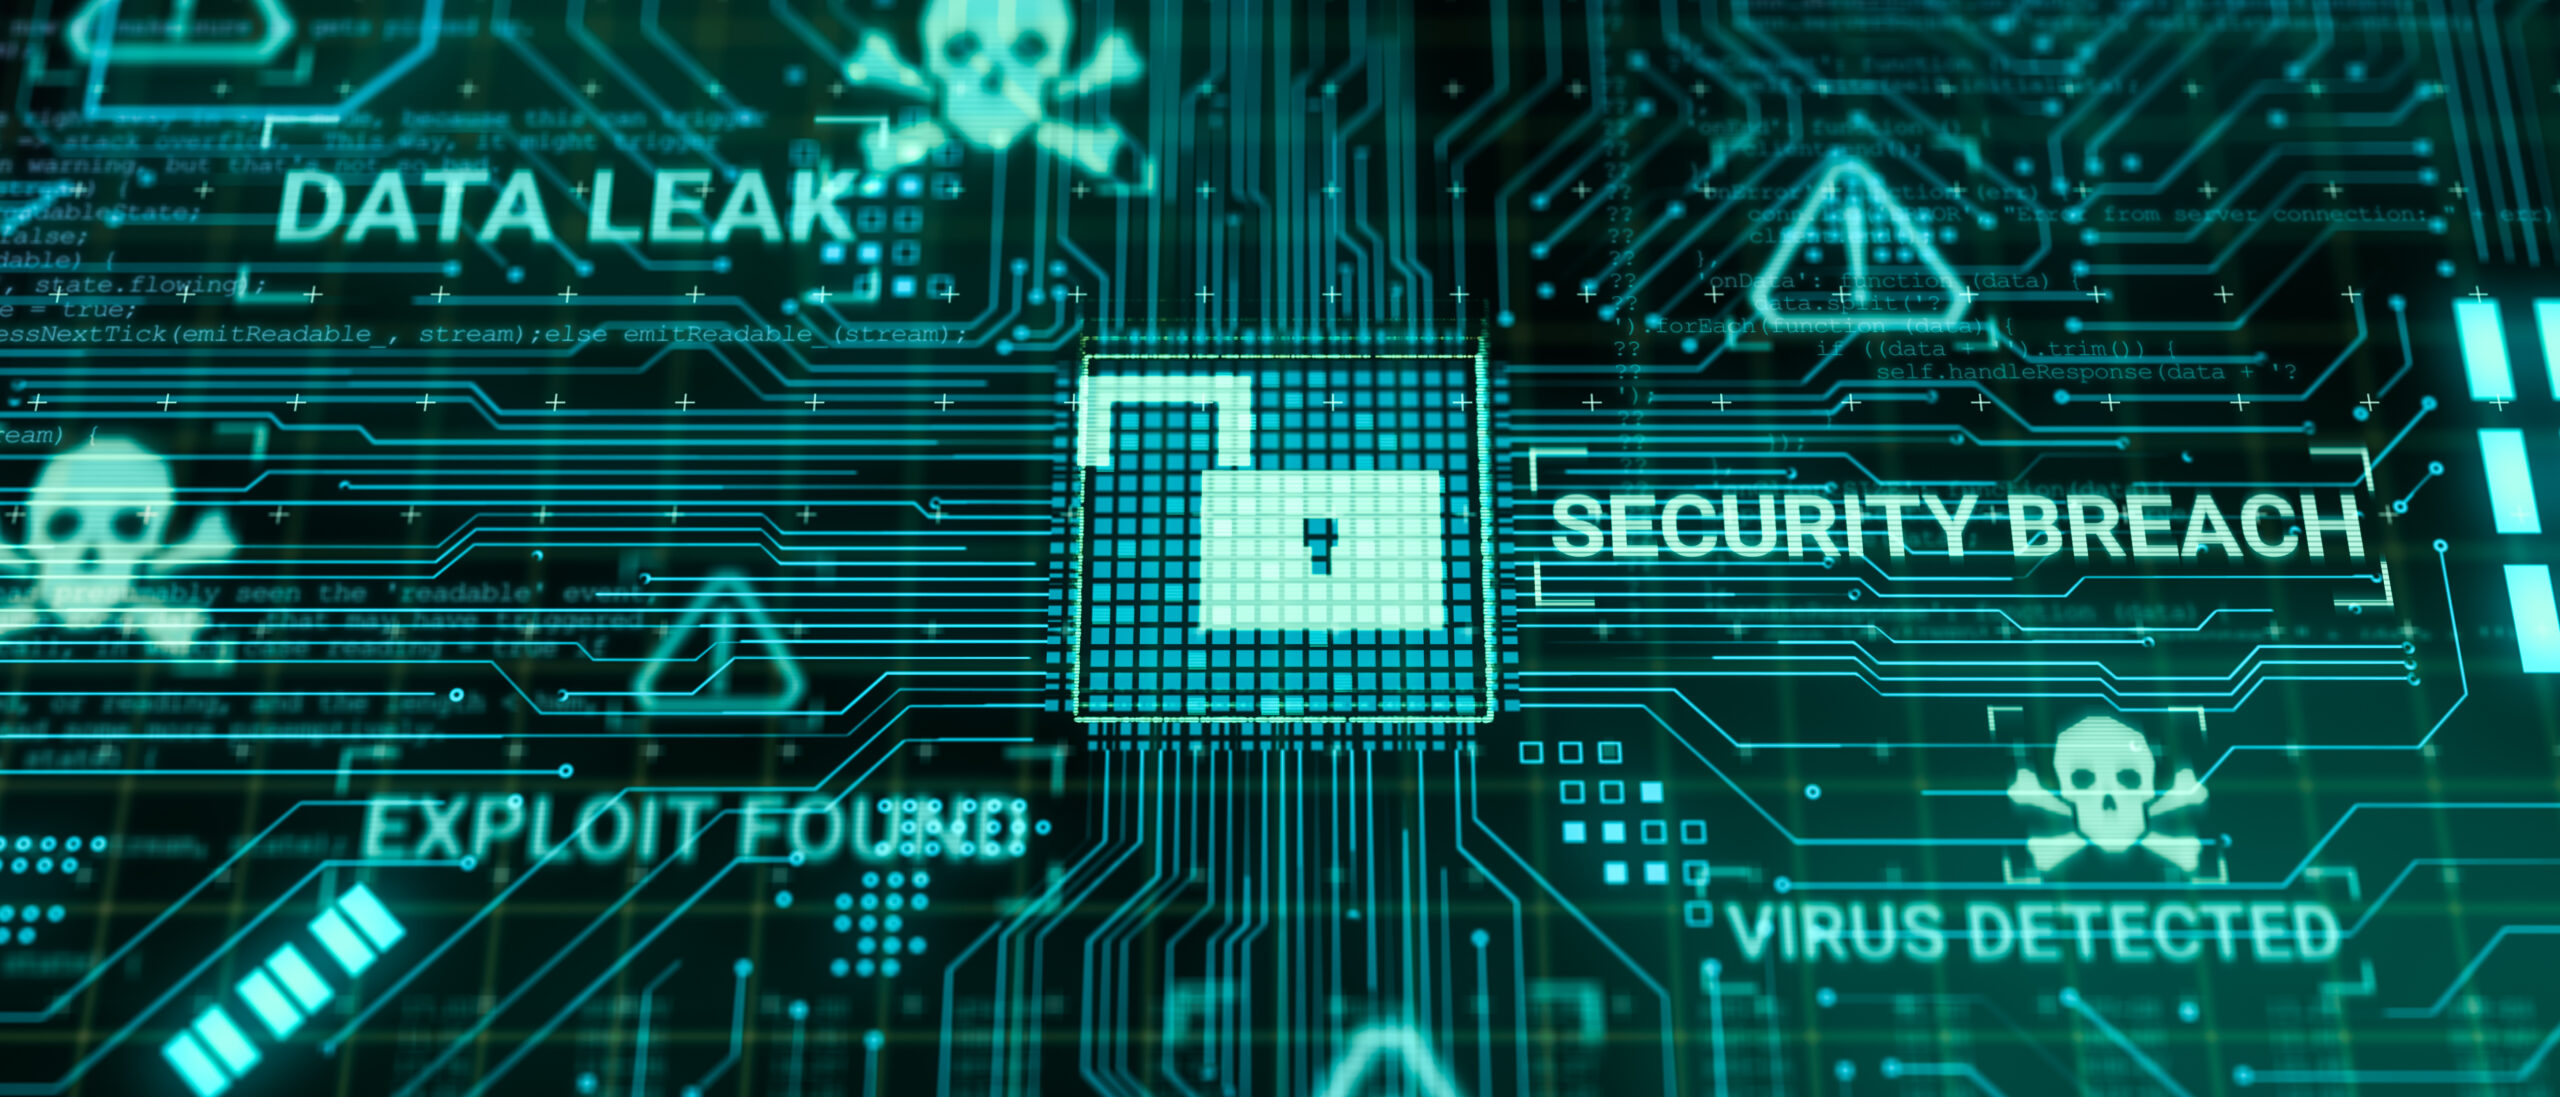 Lockbit ransomware still poses persistent threat to businesses, warn international agencies